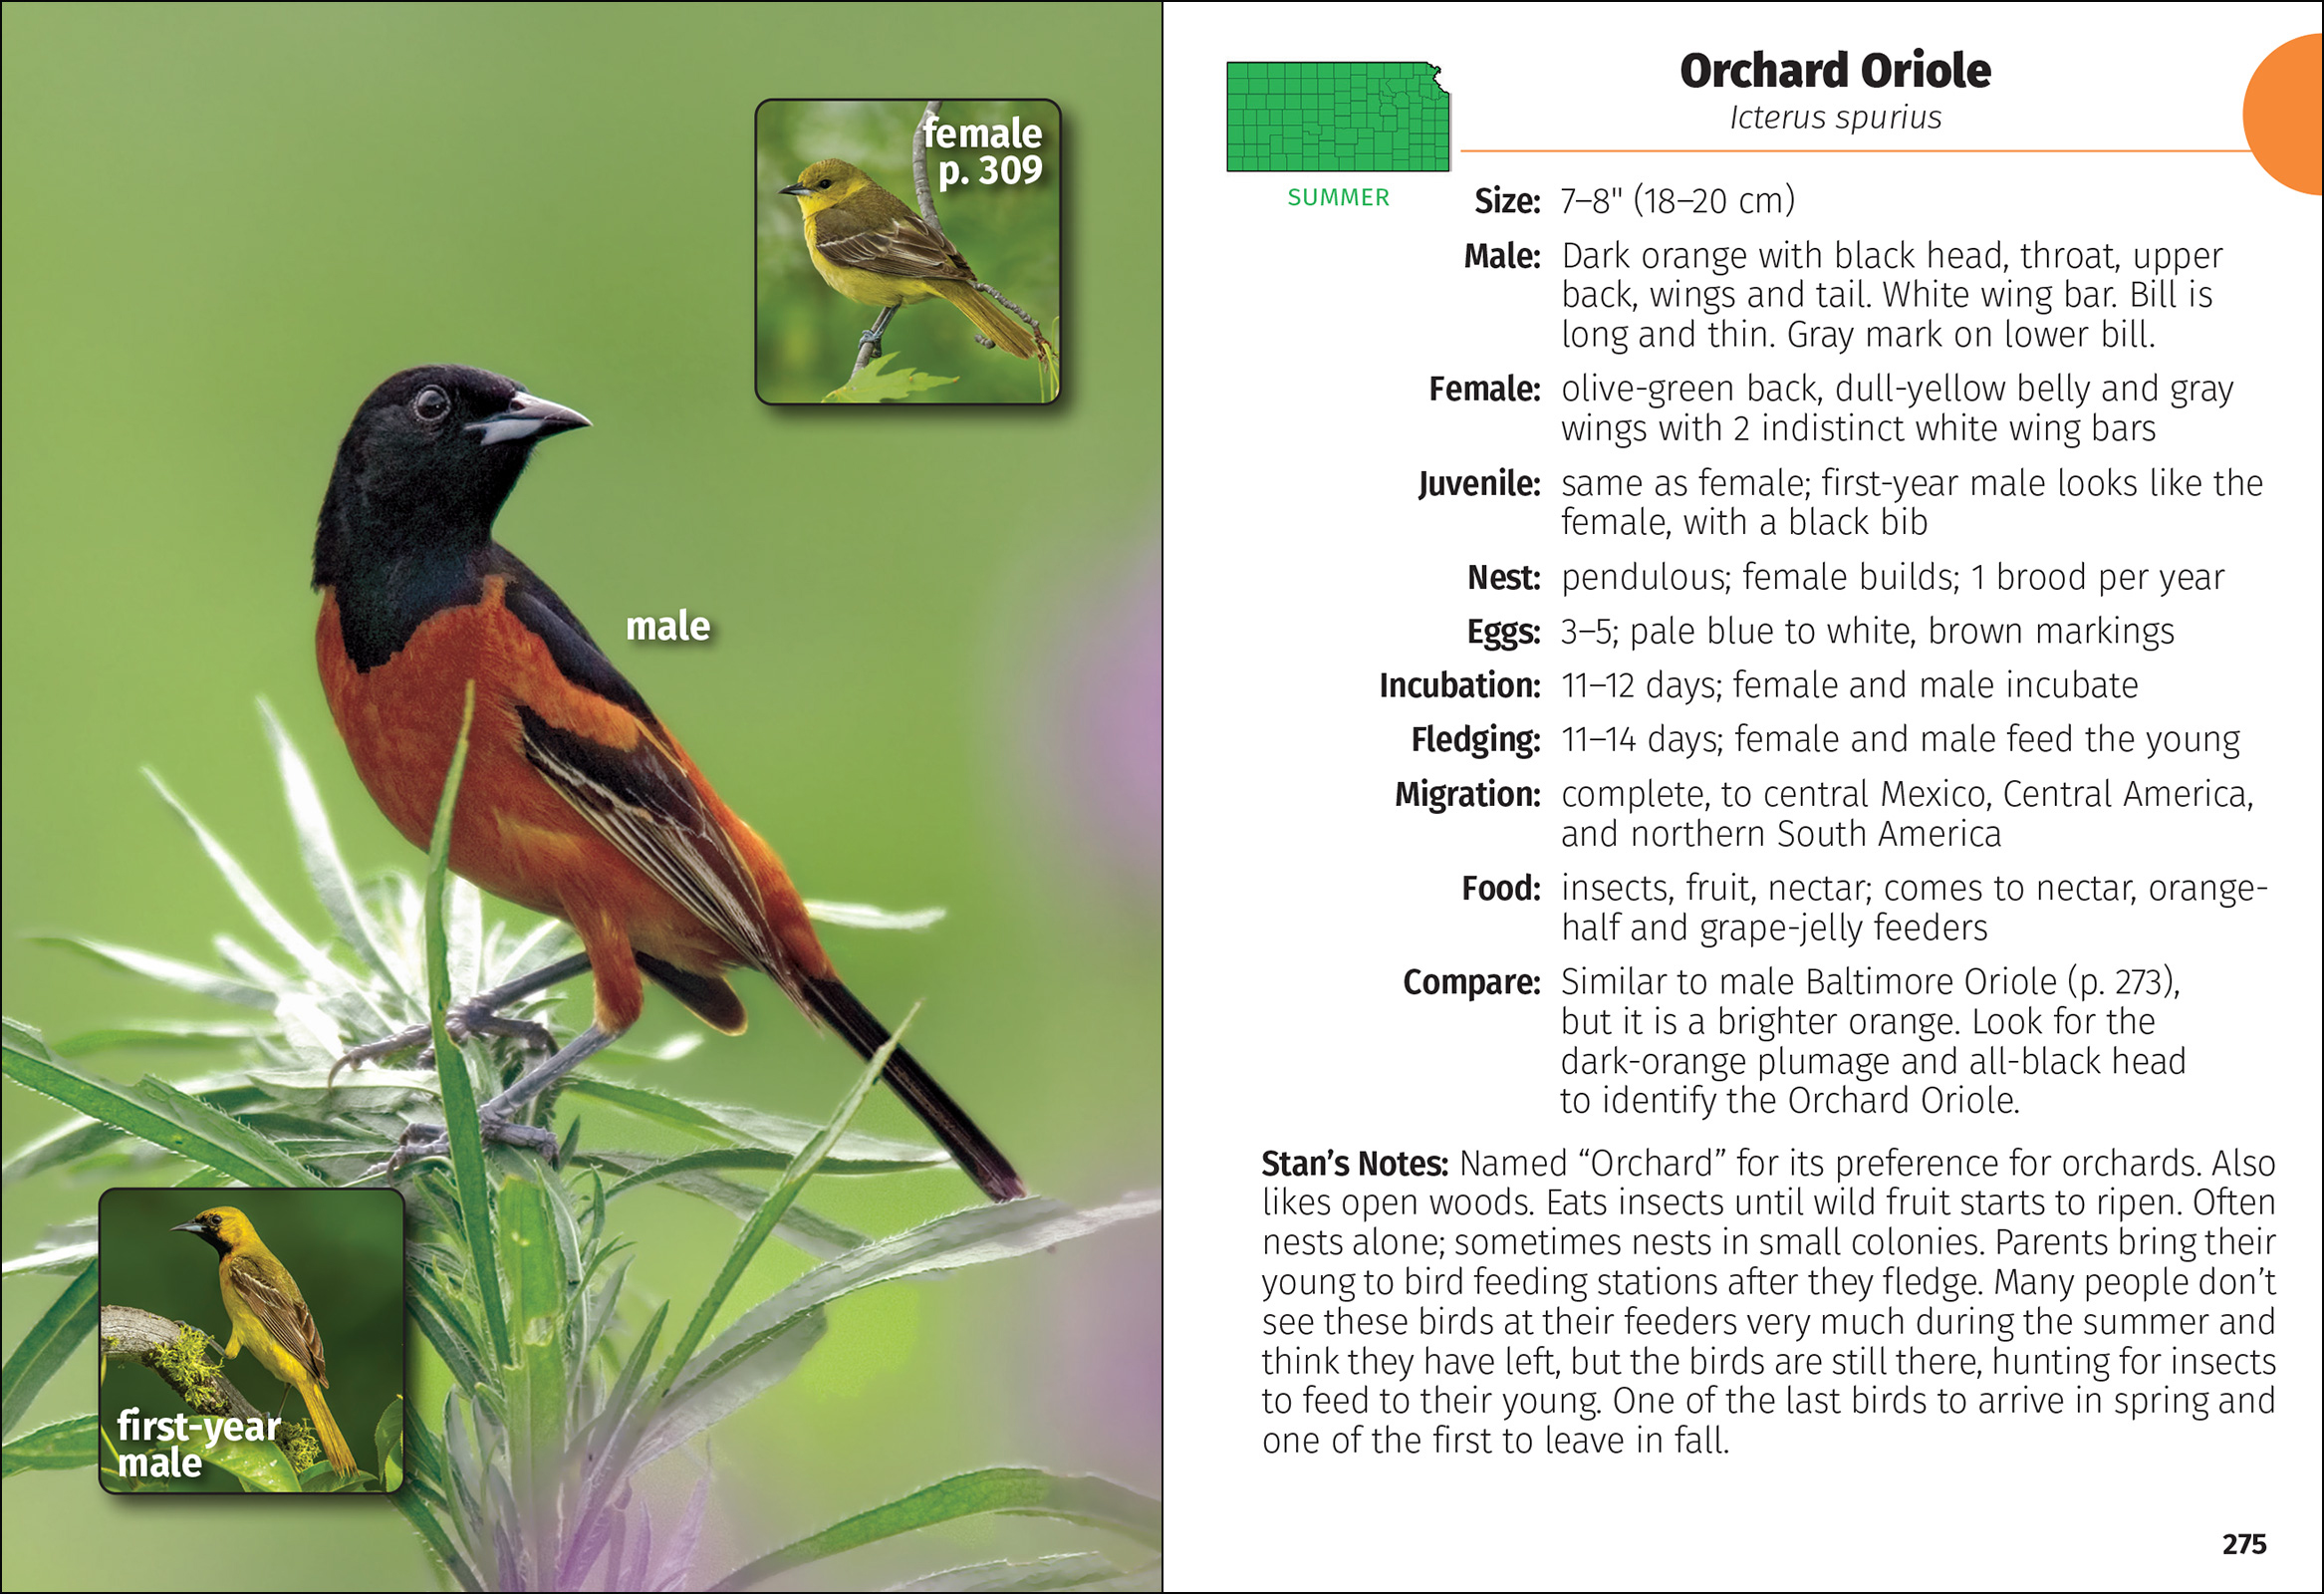 Birds of Kansas Field Guide